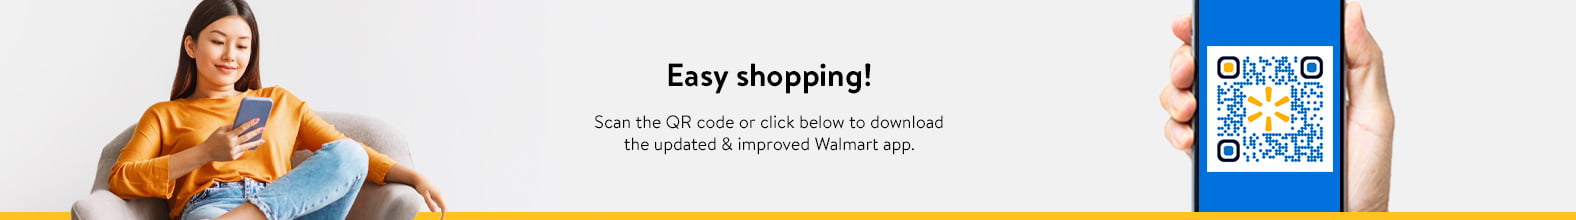 Walmart Canada makes online shopping easier